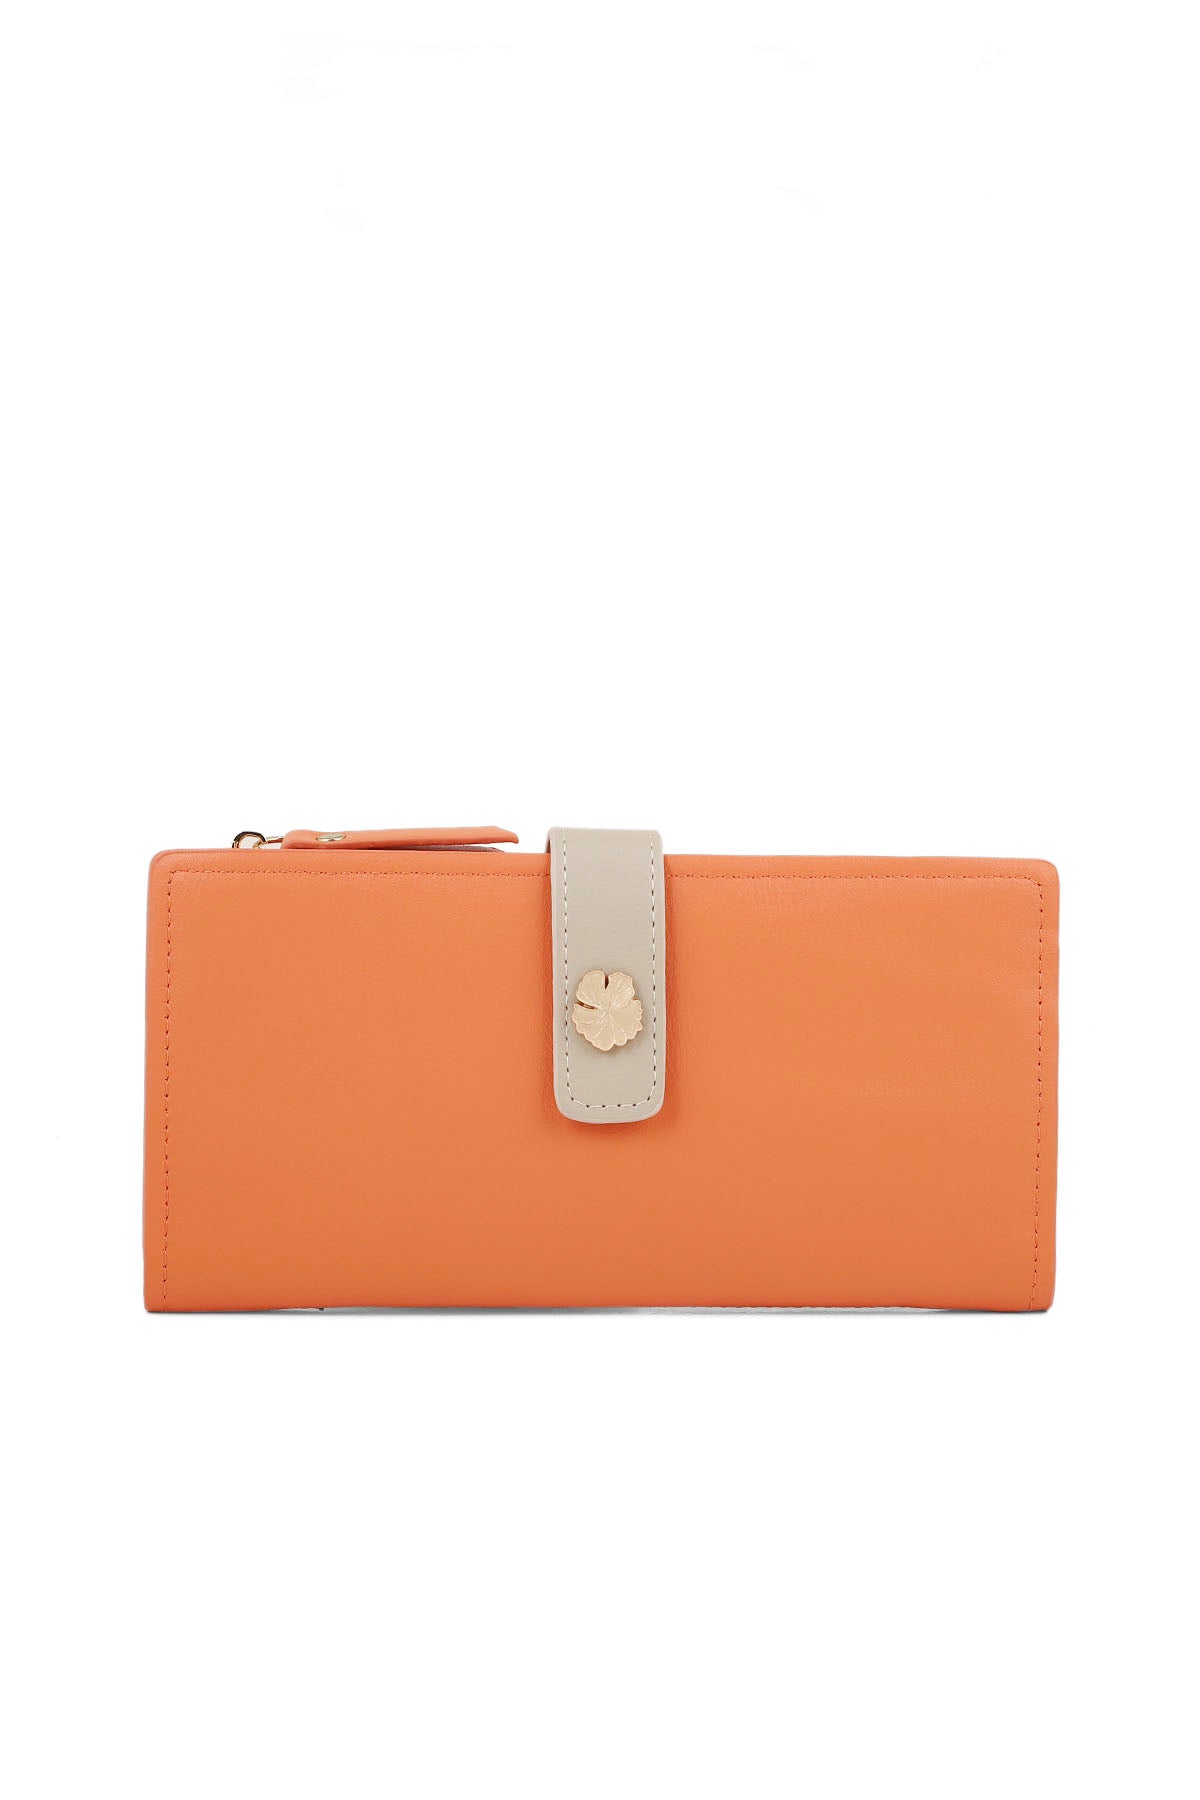 Wristlet Wallet B26046-Orange